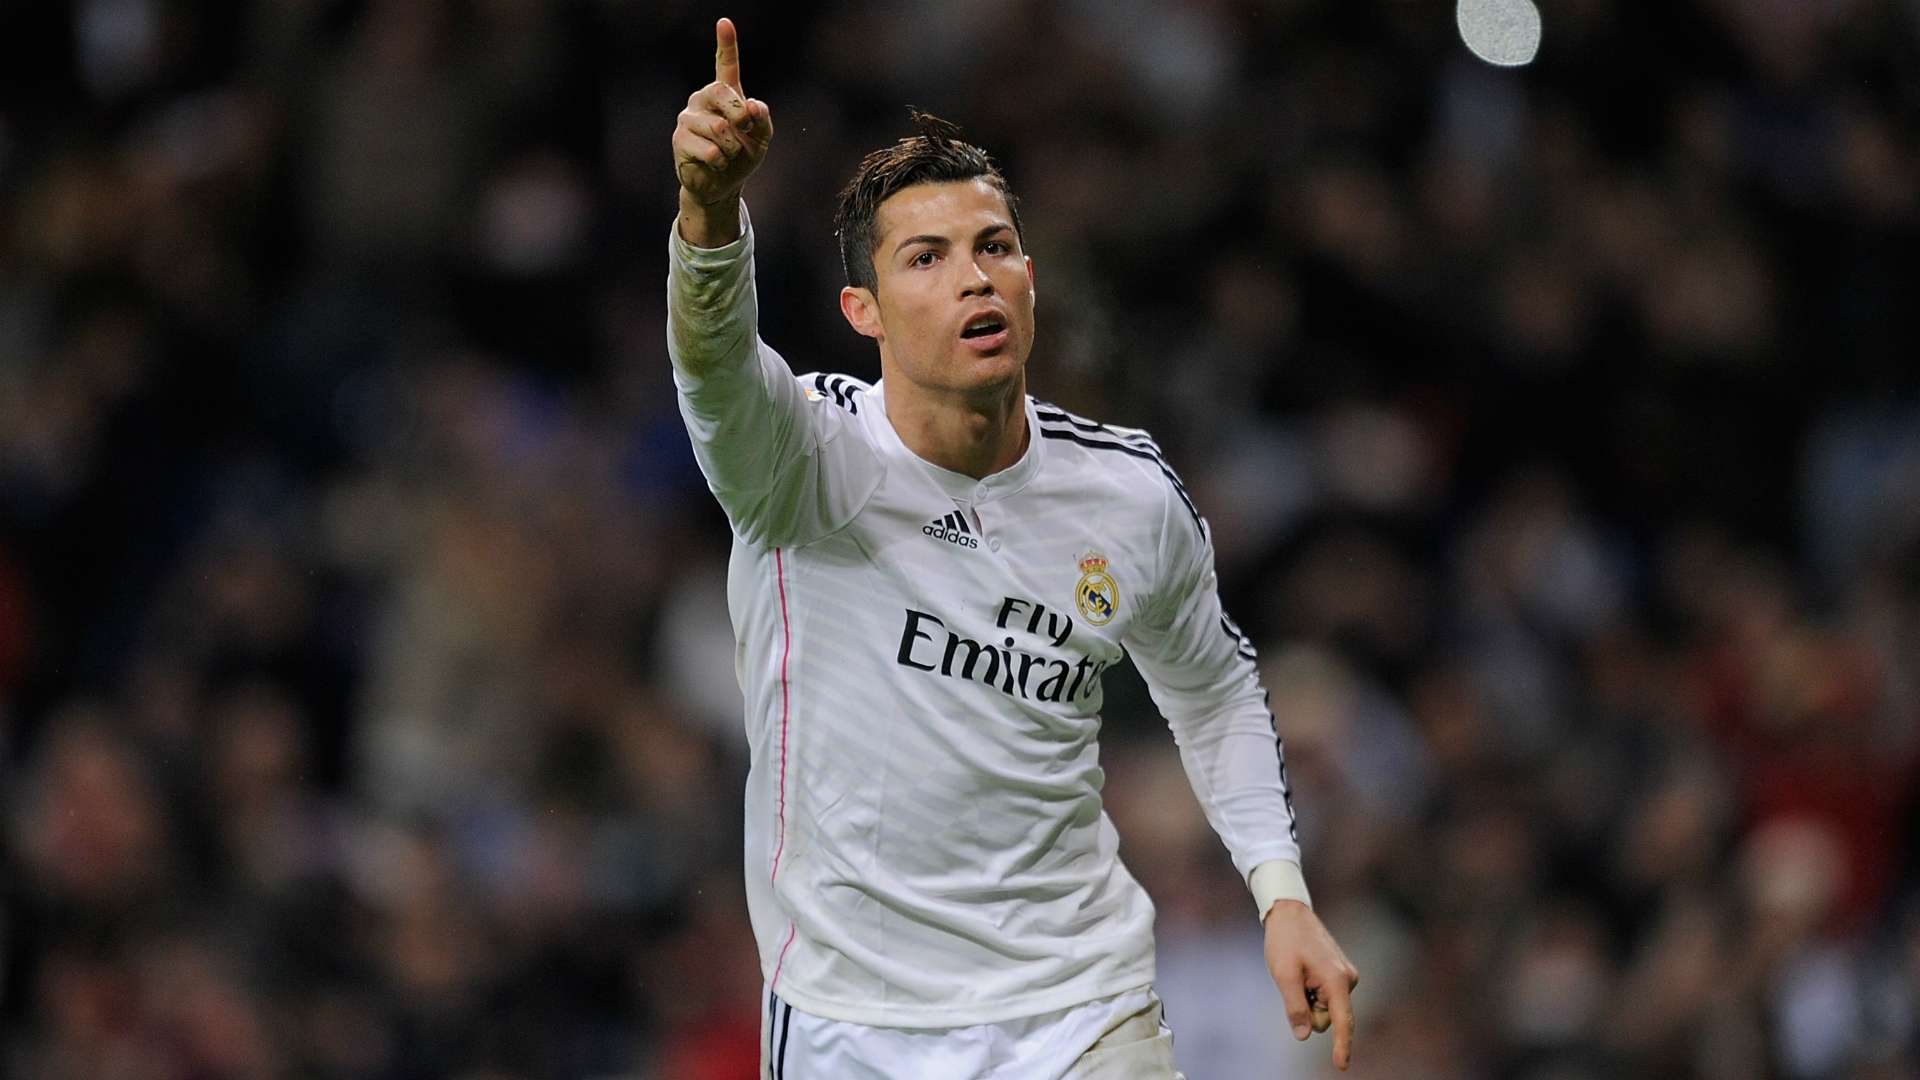 Cristiano Ronaldo Real Madrid 2014